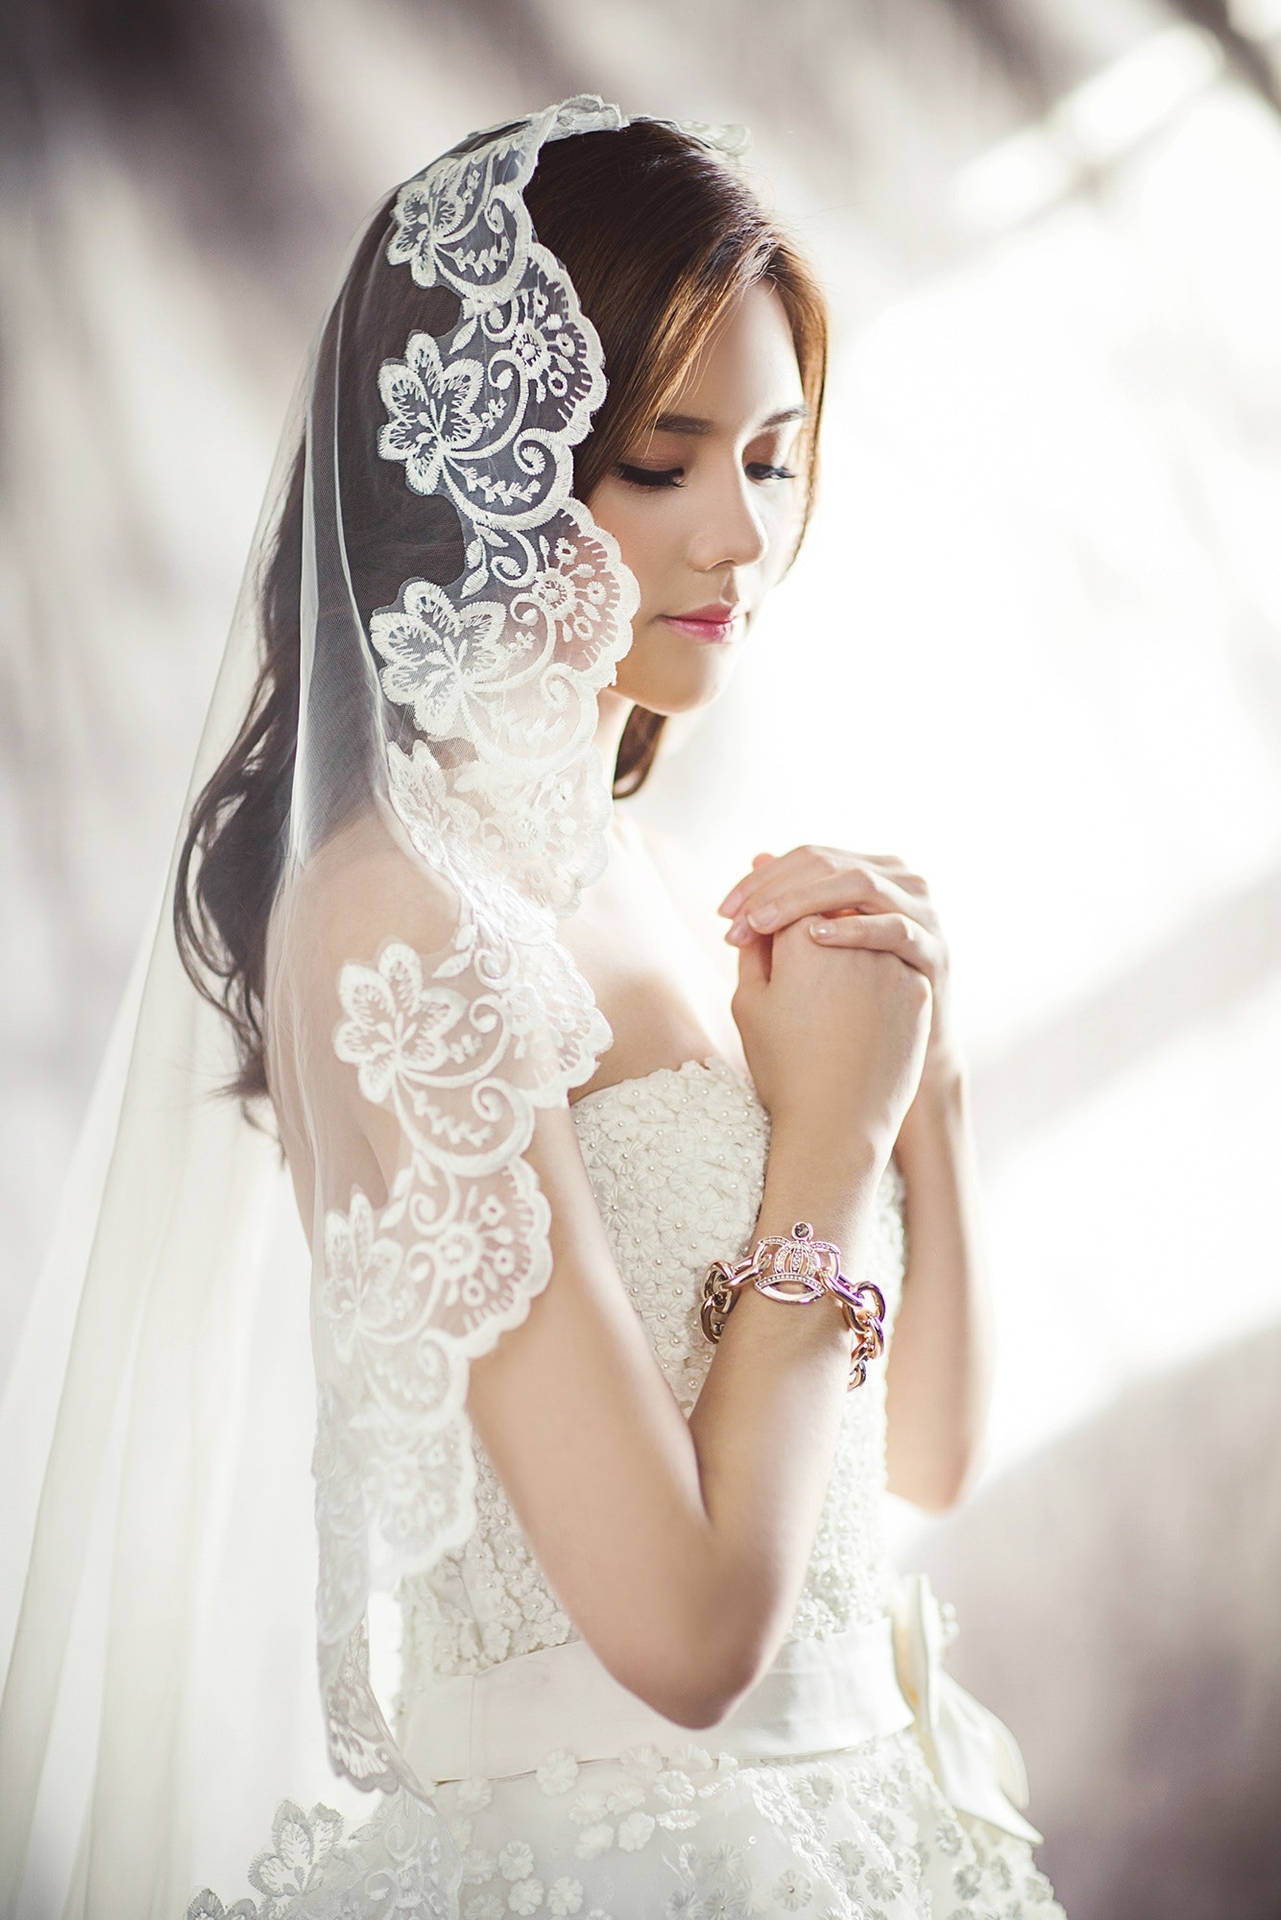 Beautiful Girls Wedding Gown And Veil Wallpaper